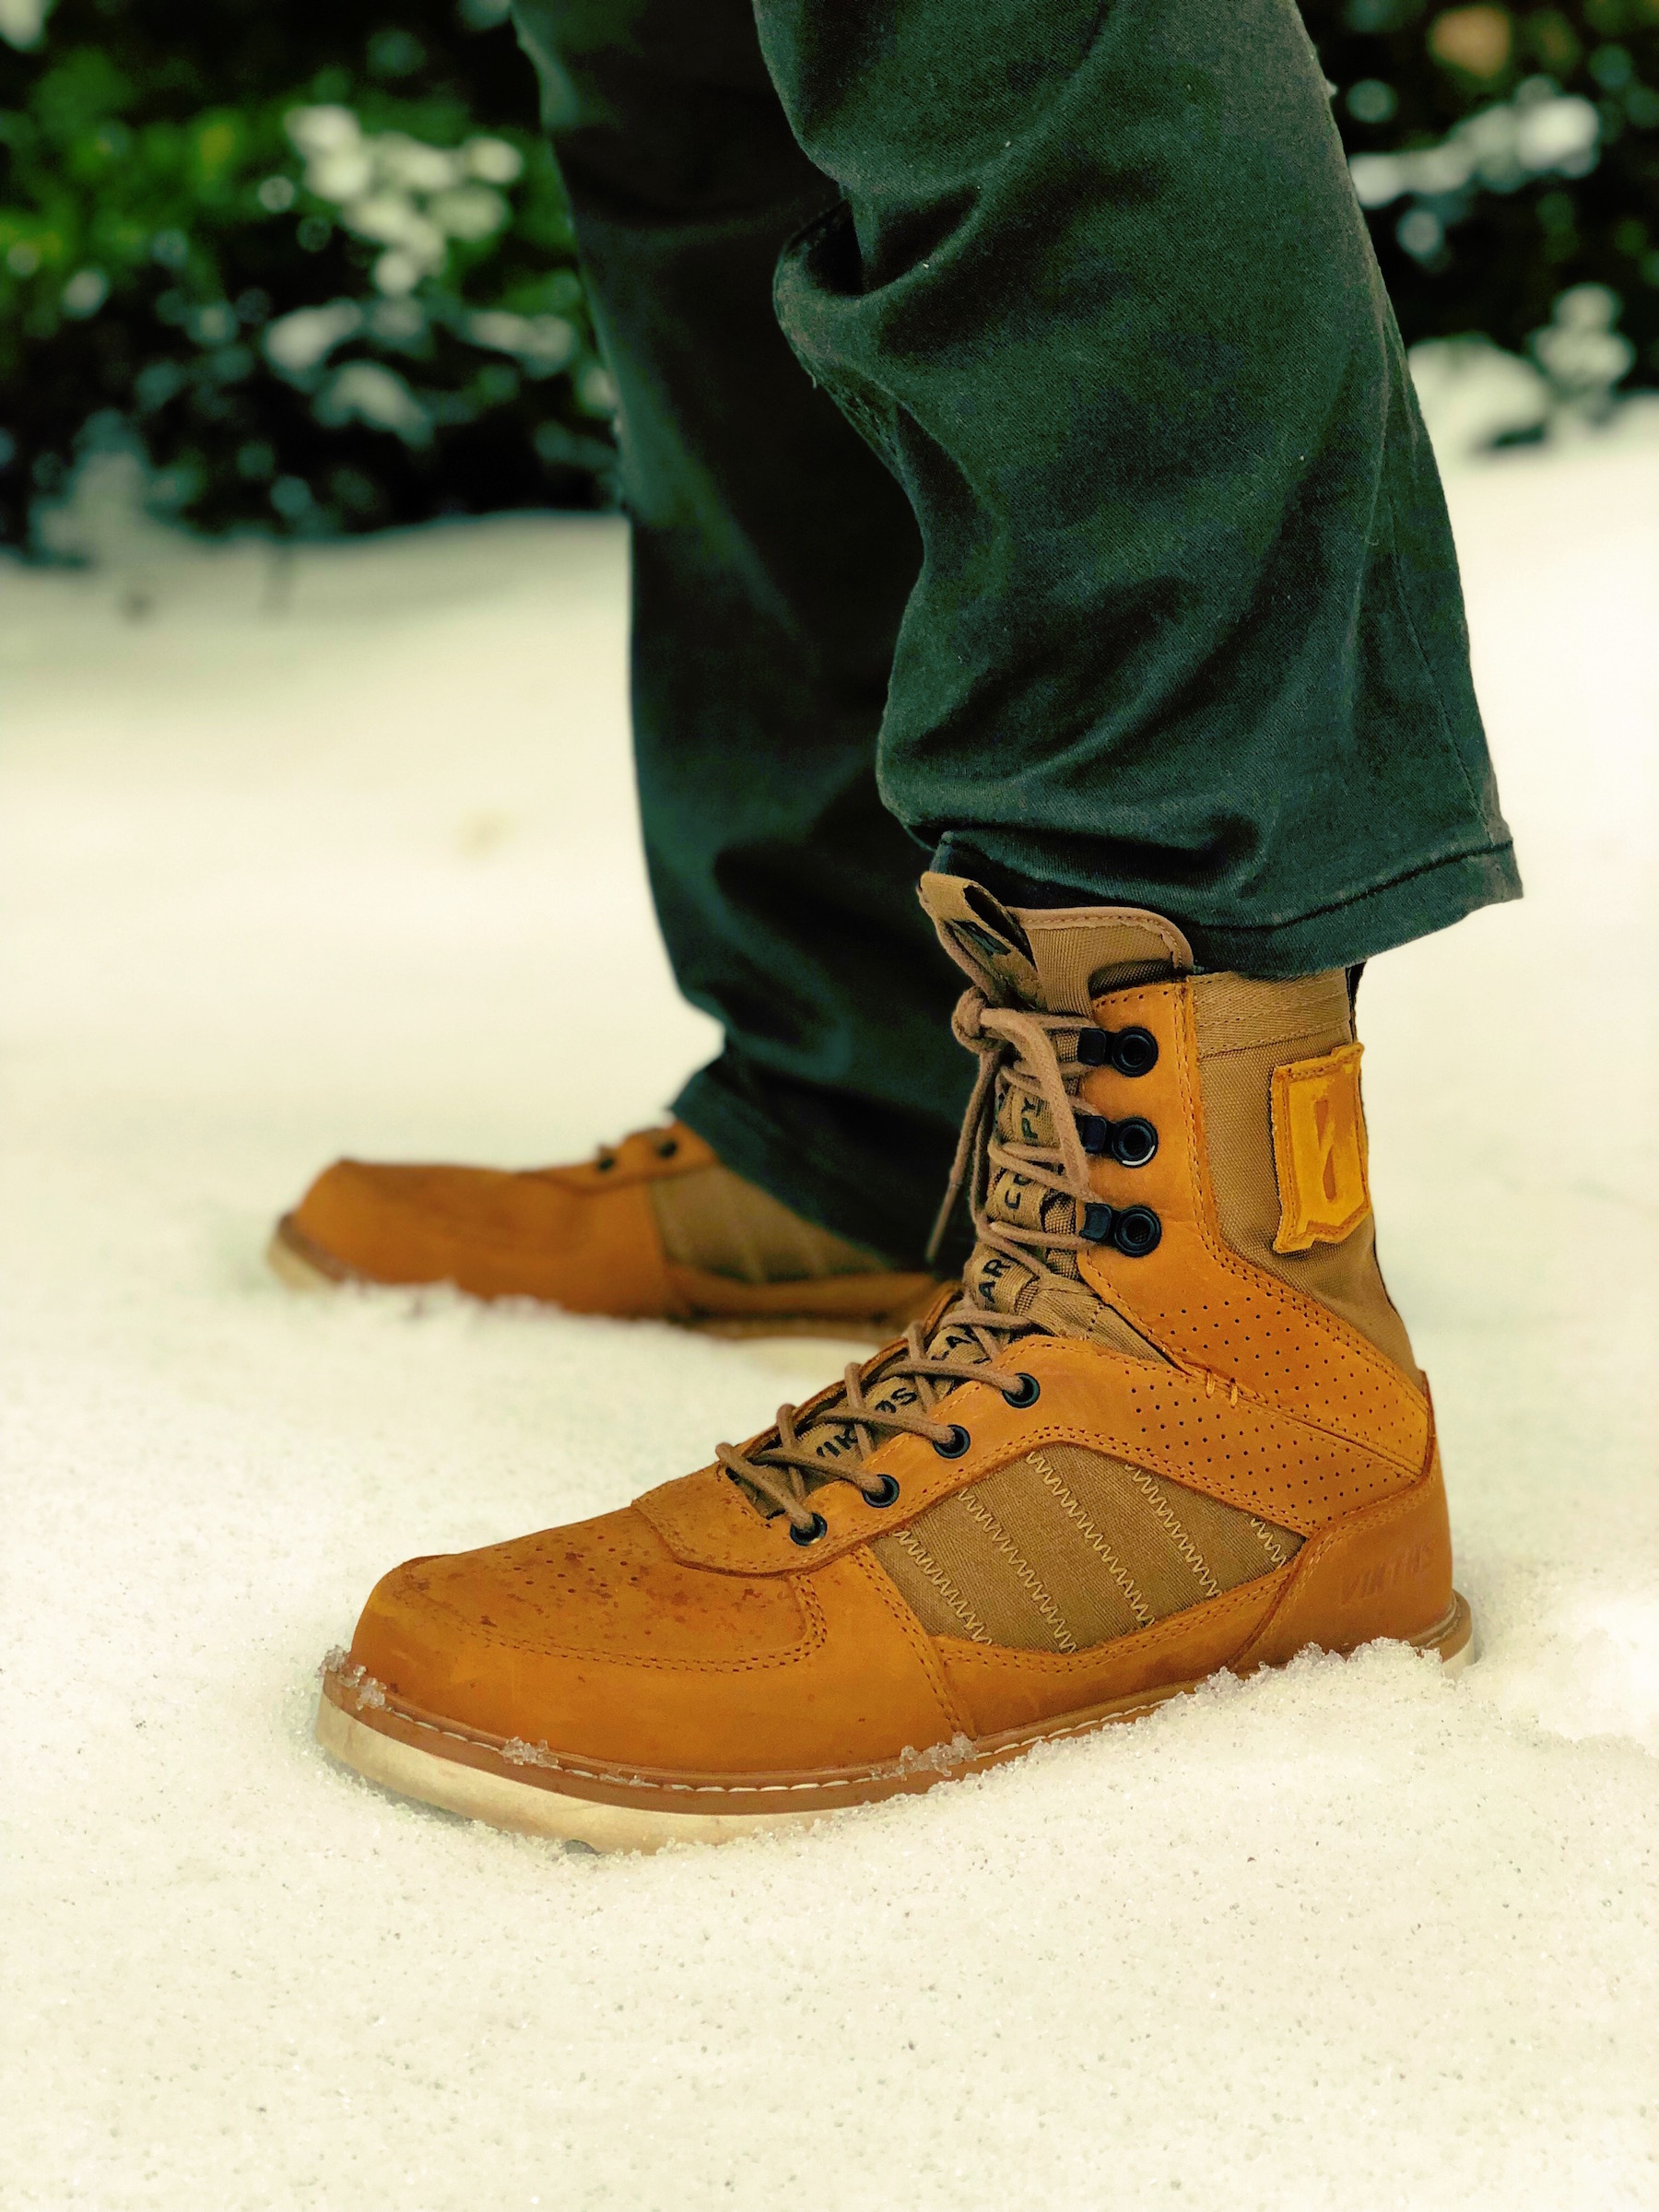 viktos boots review